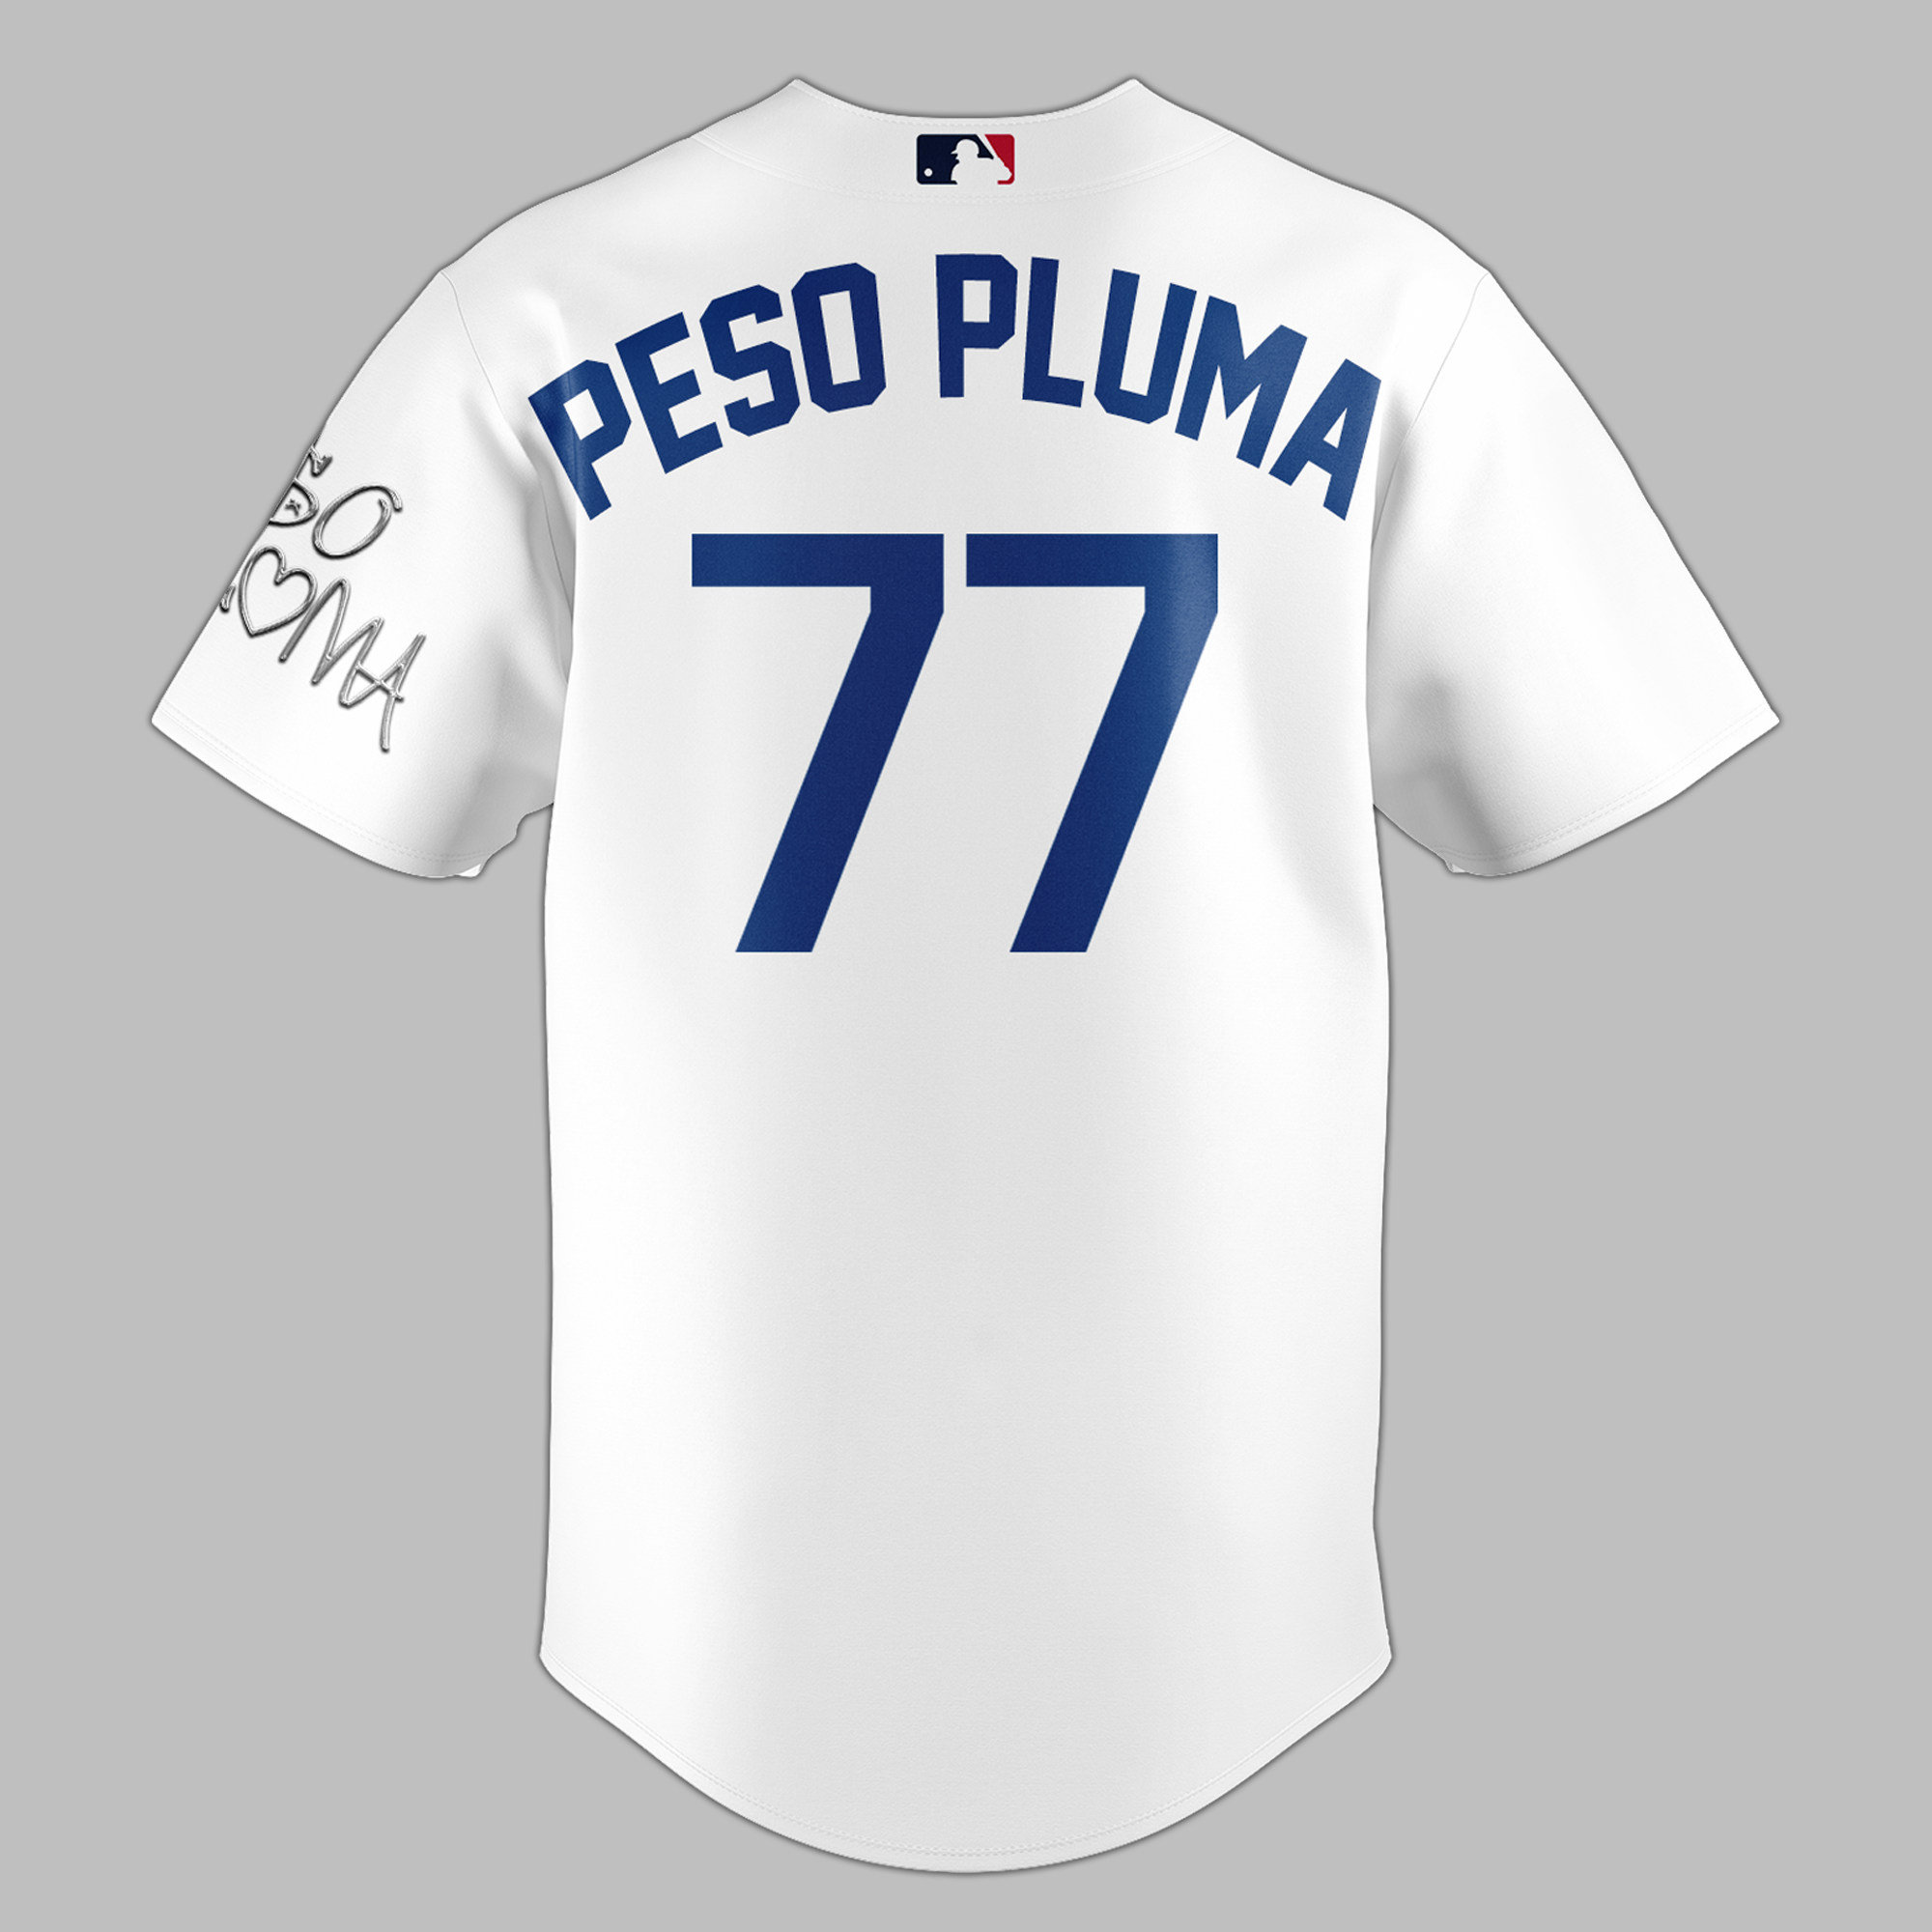 Men's #77 Peso Pluma LA Dodgers Special Mexico Jersey - Dgear